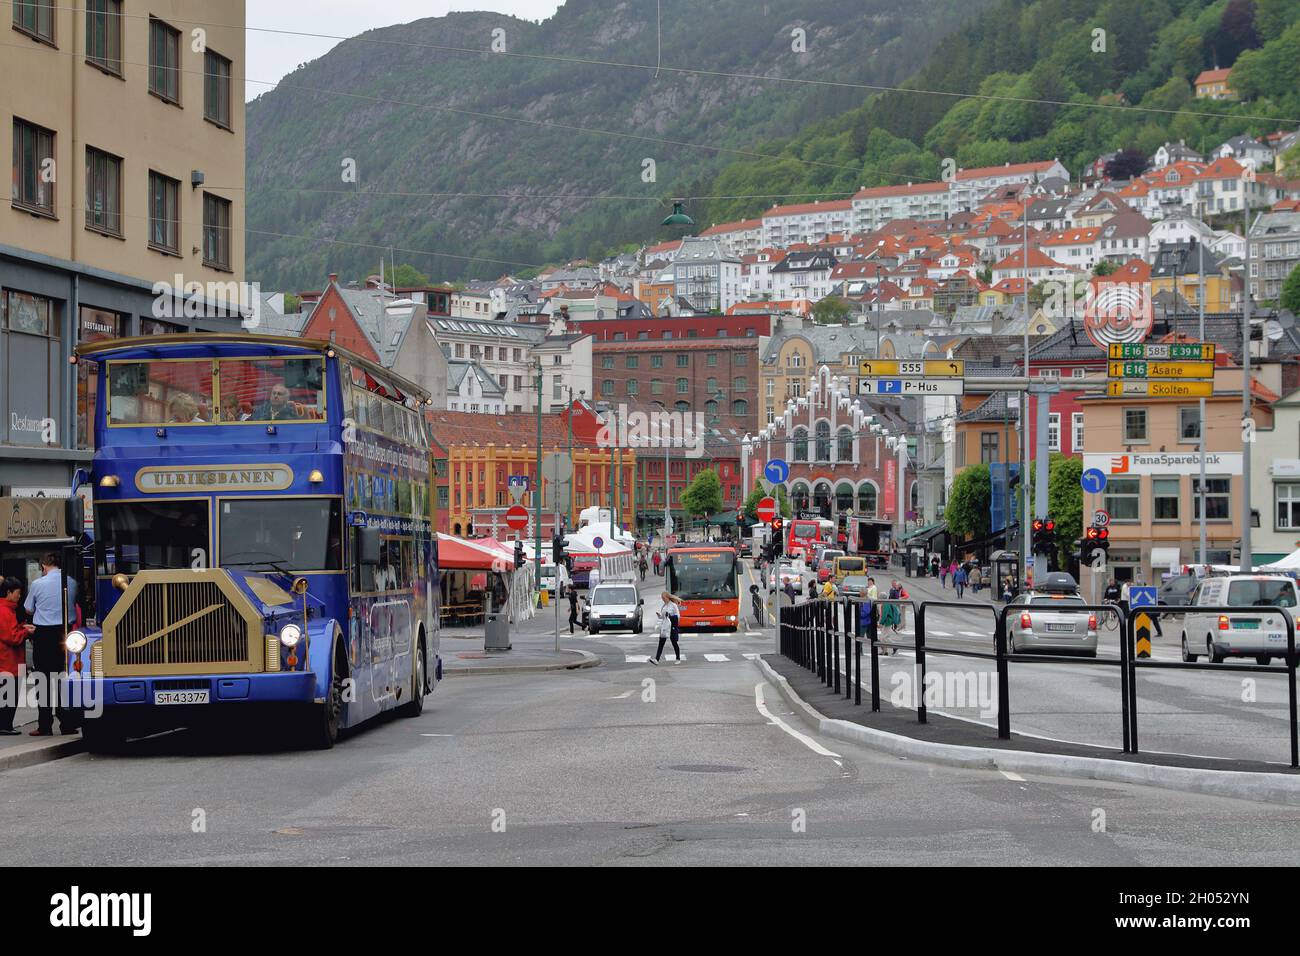 Bergen, Norway - Jun 13, 2012: Tourist bus on city street Stock Photo